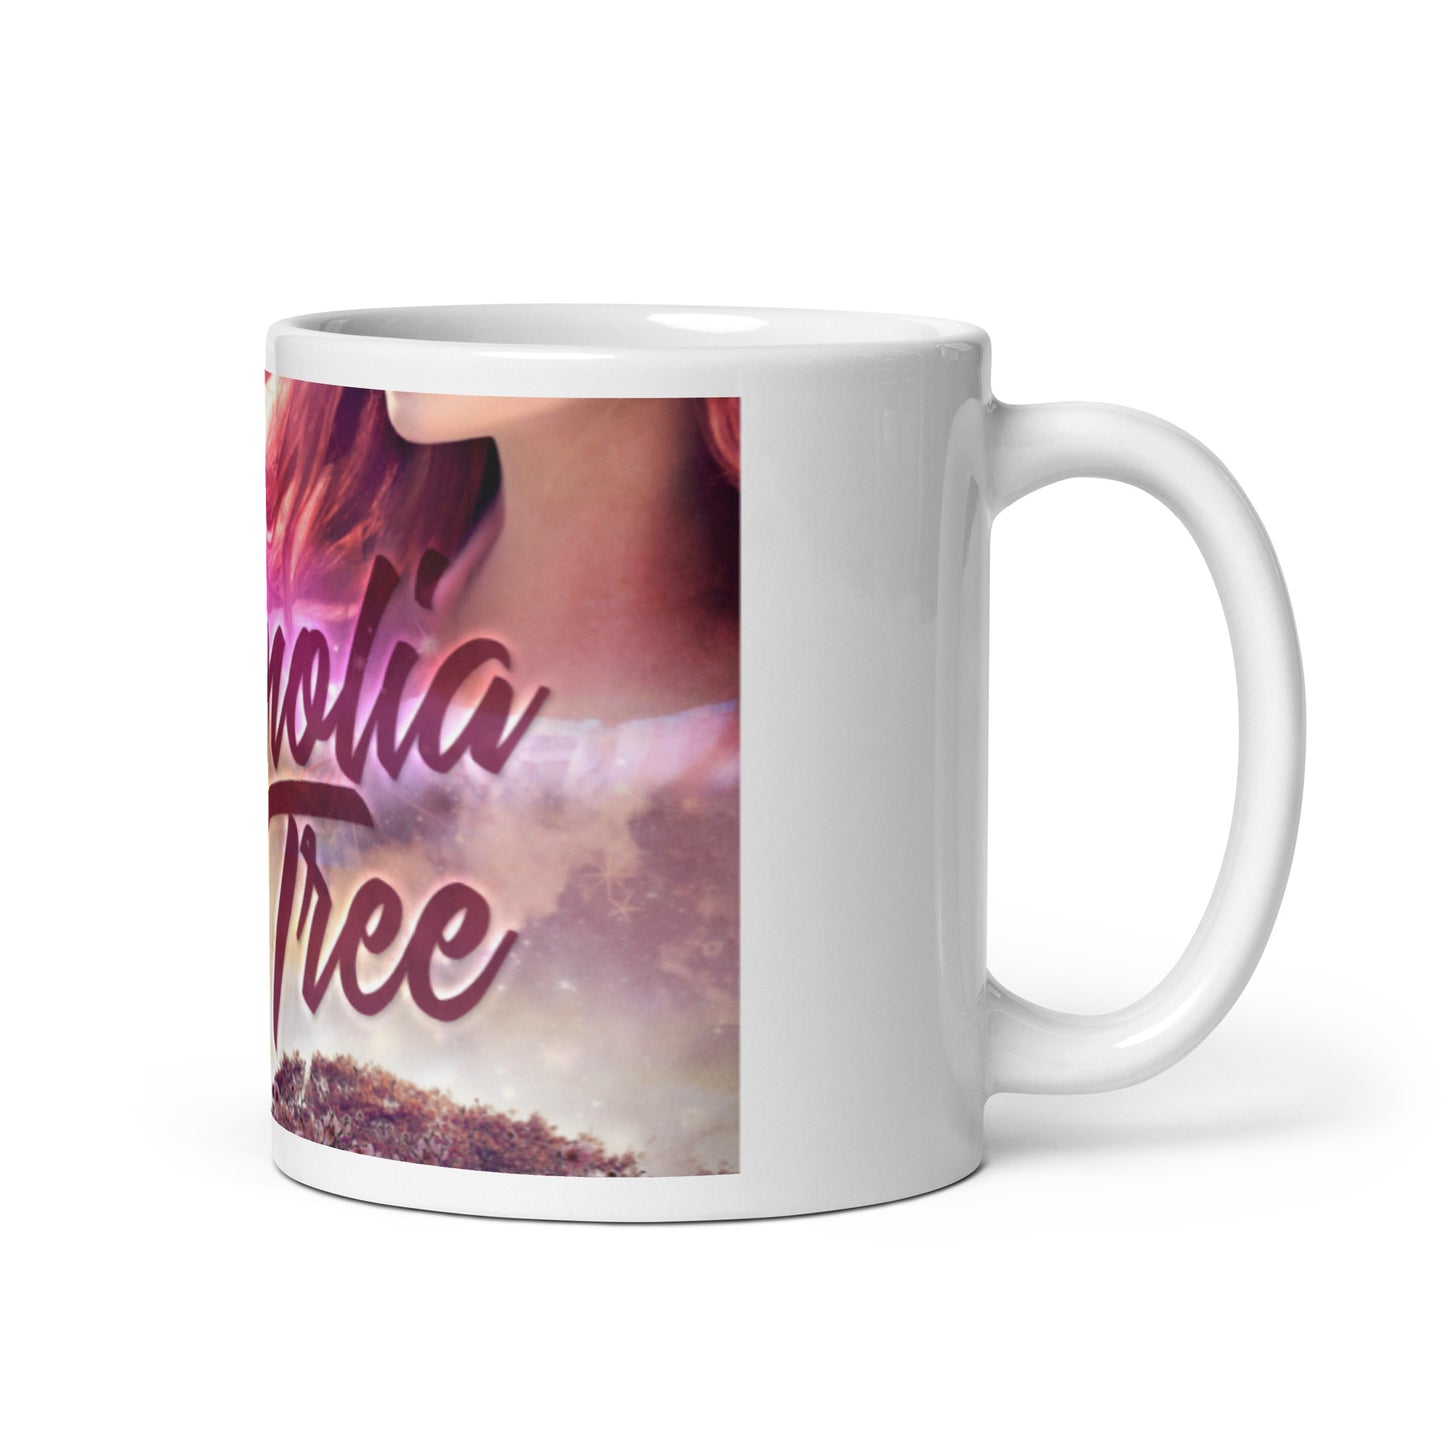 Magnolia Tree - White Coffee Mug